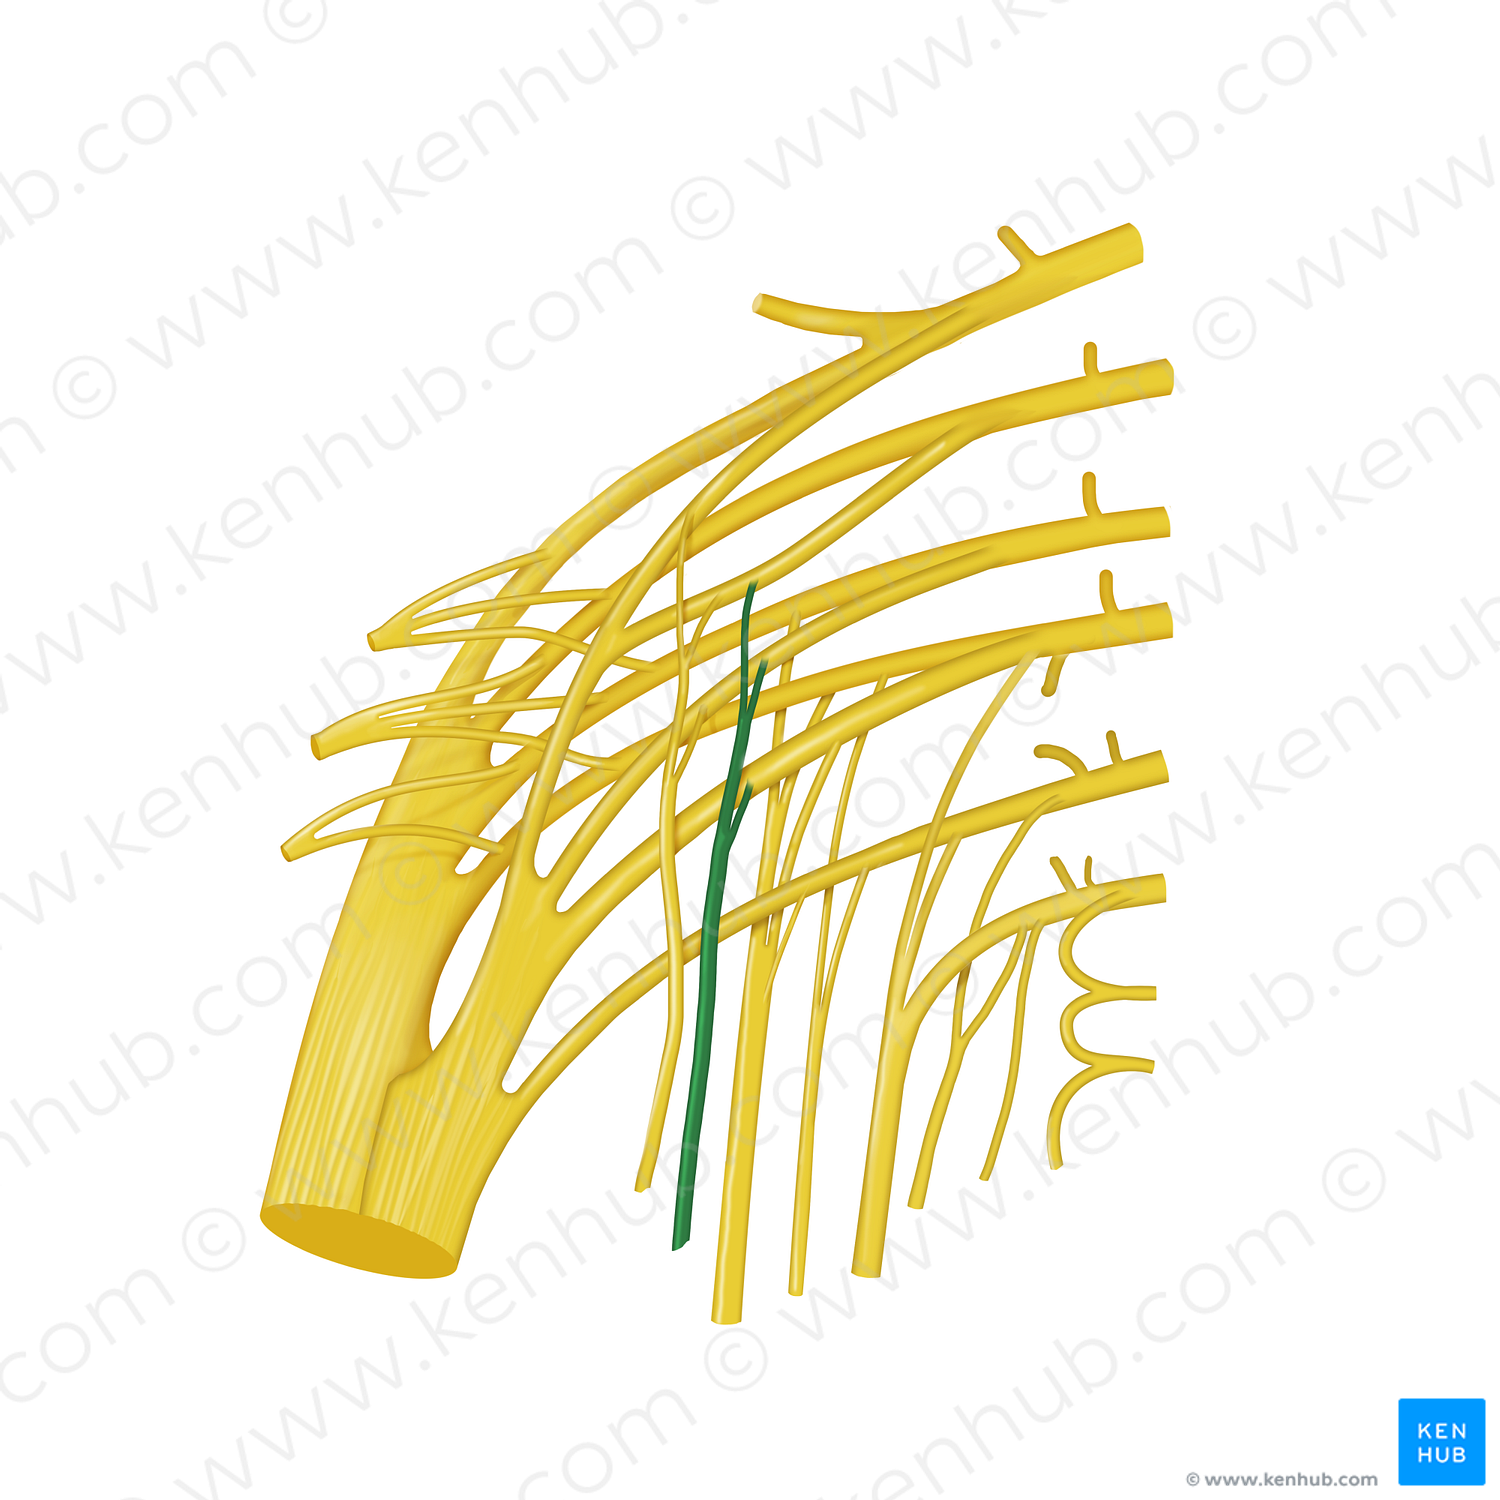 Nerve to obturator internus muscle (#12762)